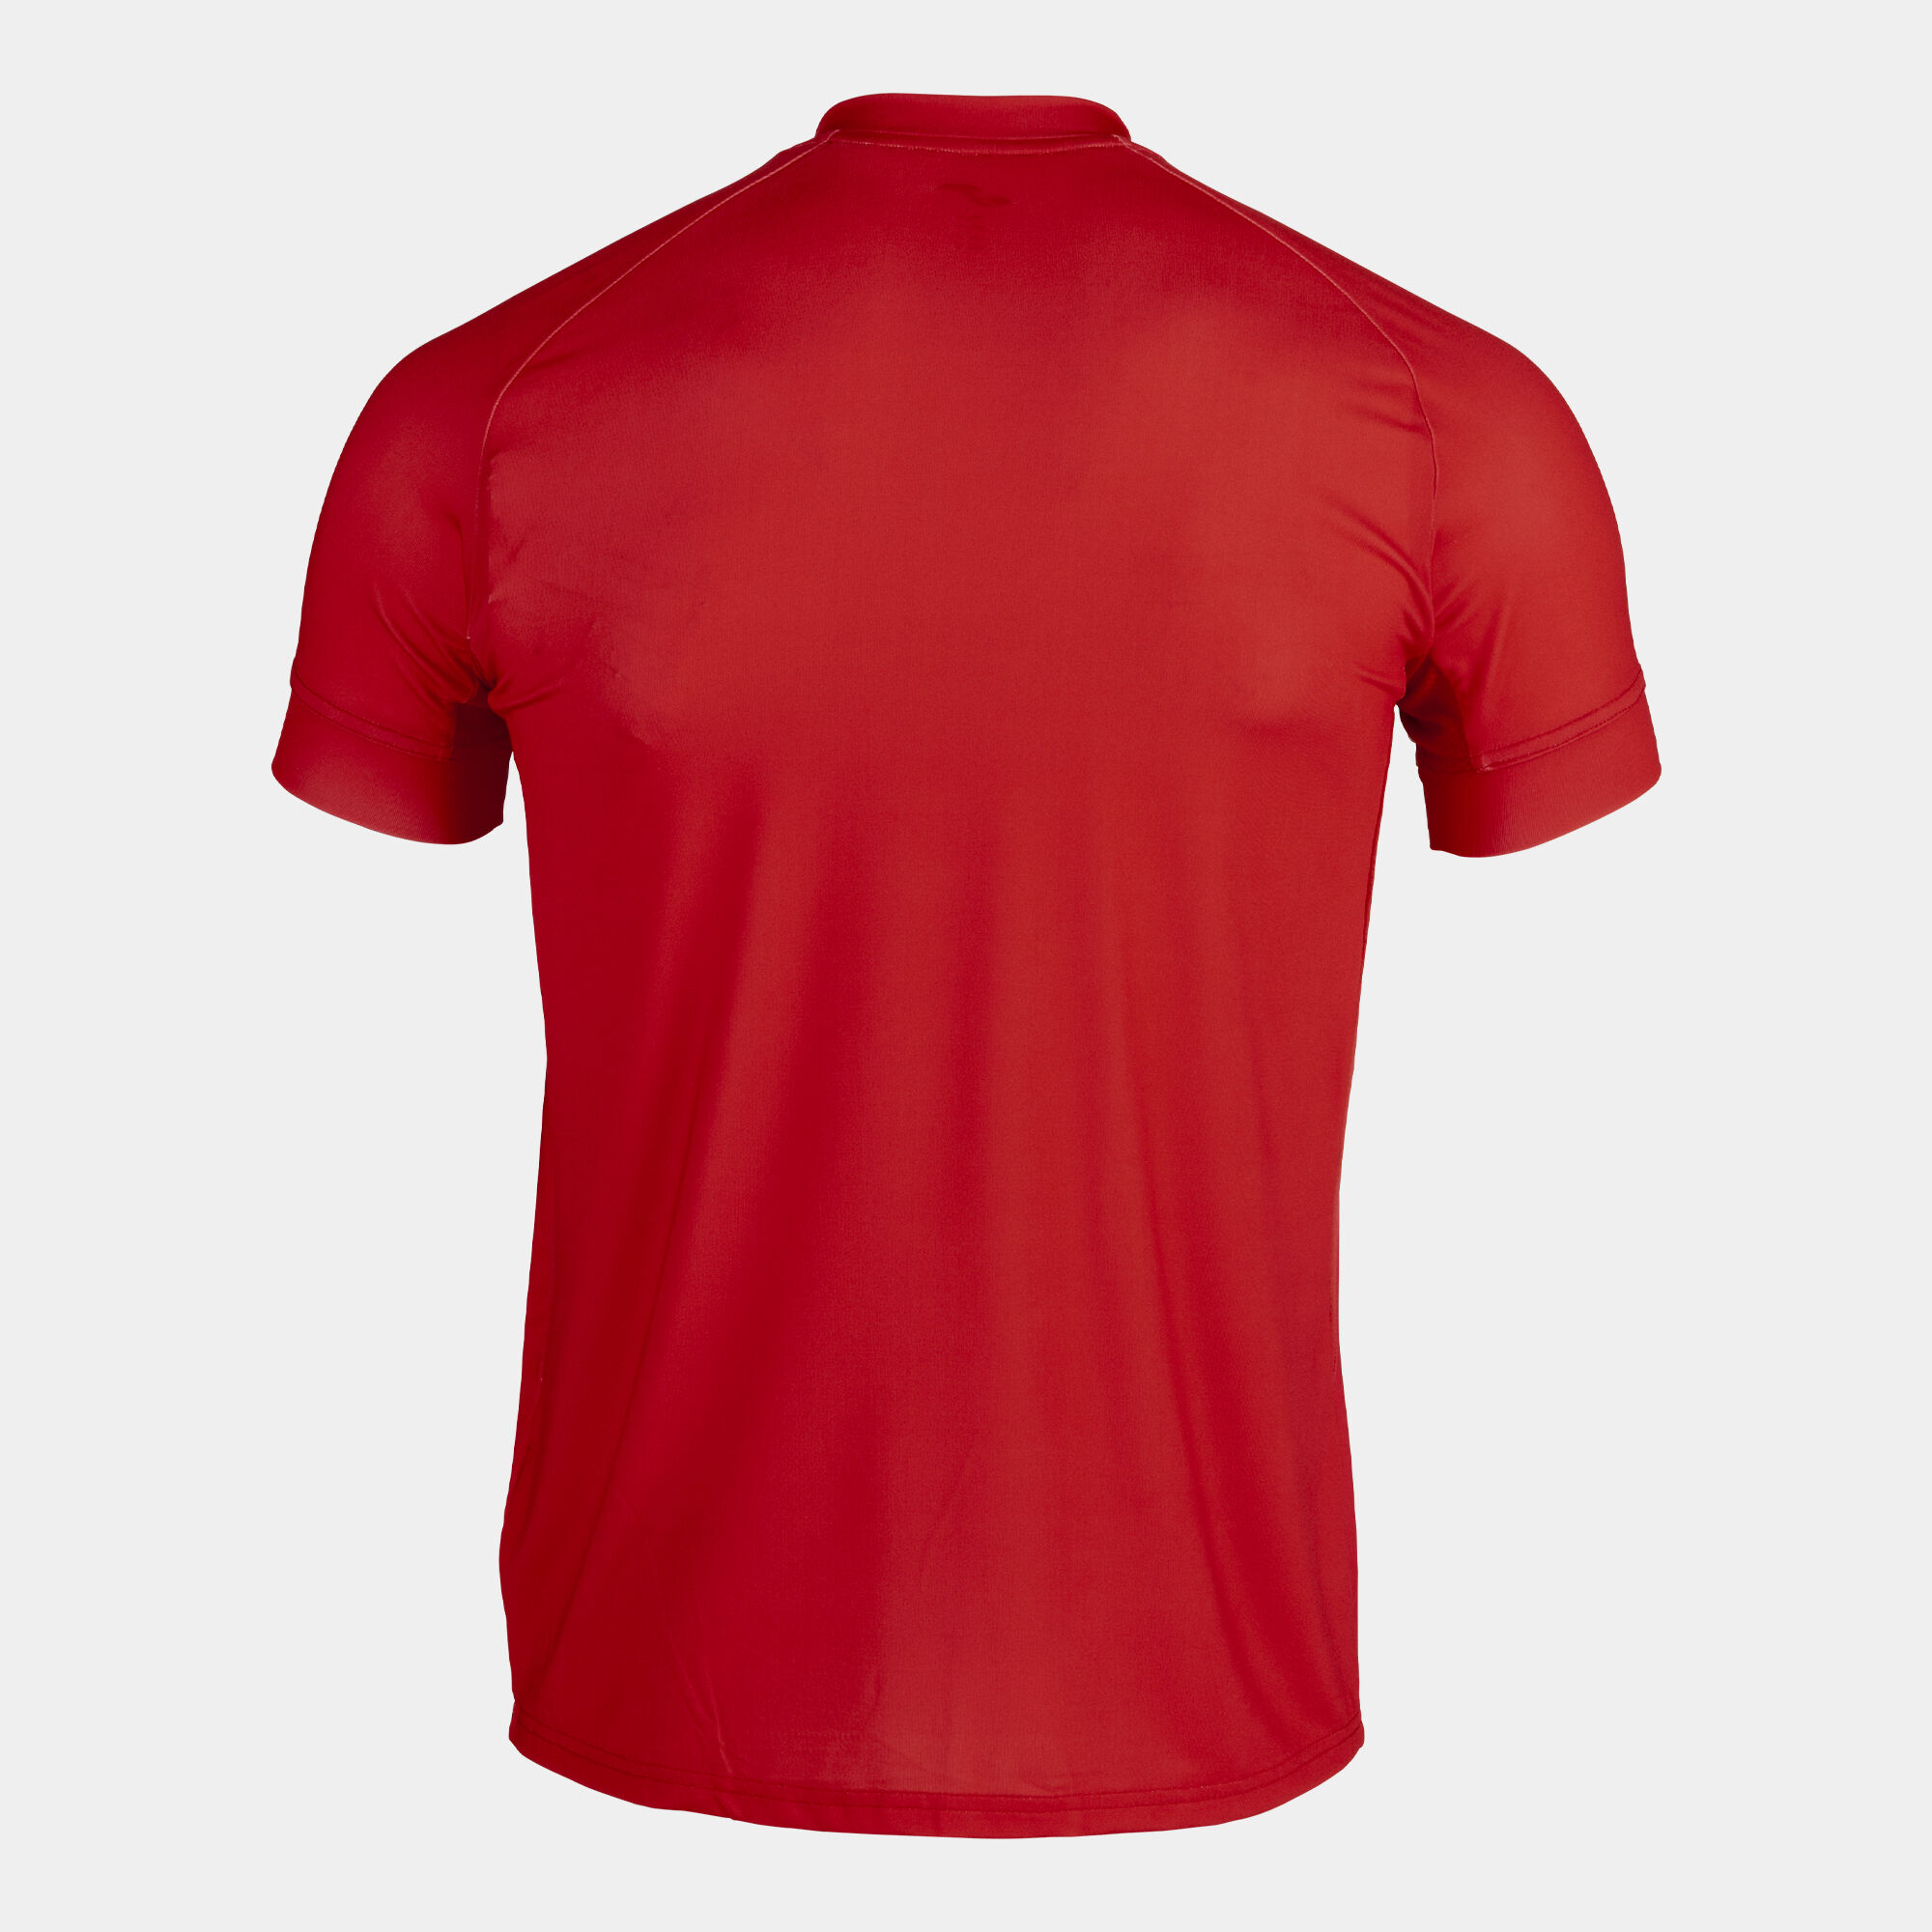 Camiseta manga corta hombre Olimpia rojo amarillo